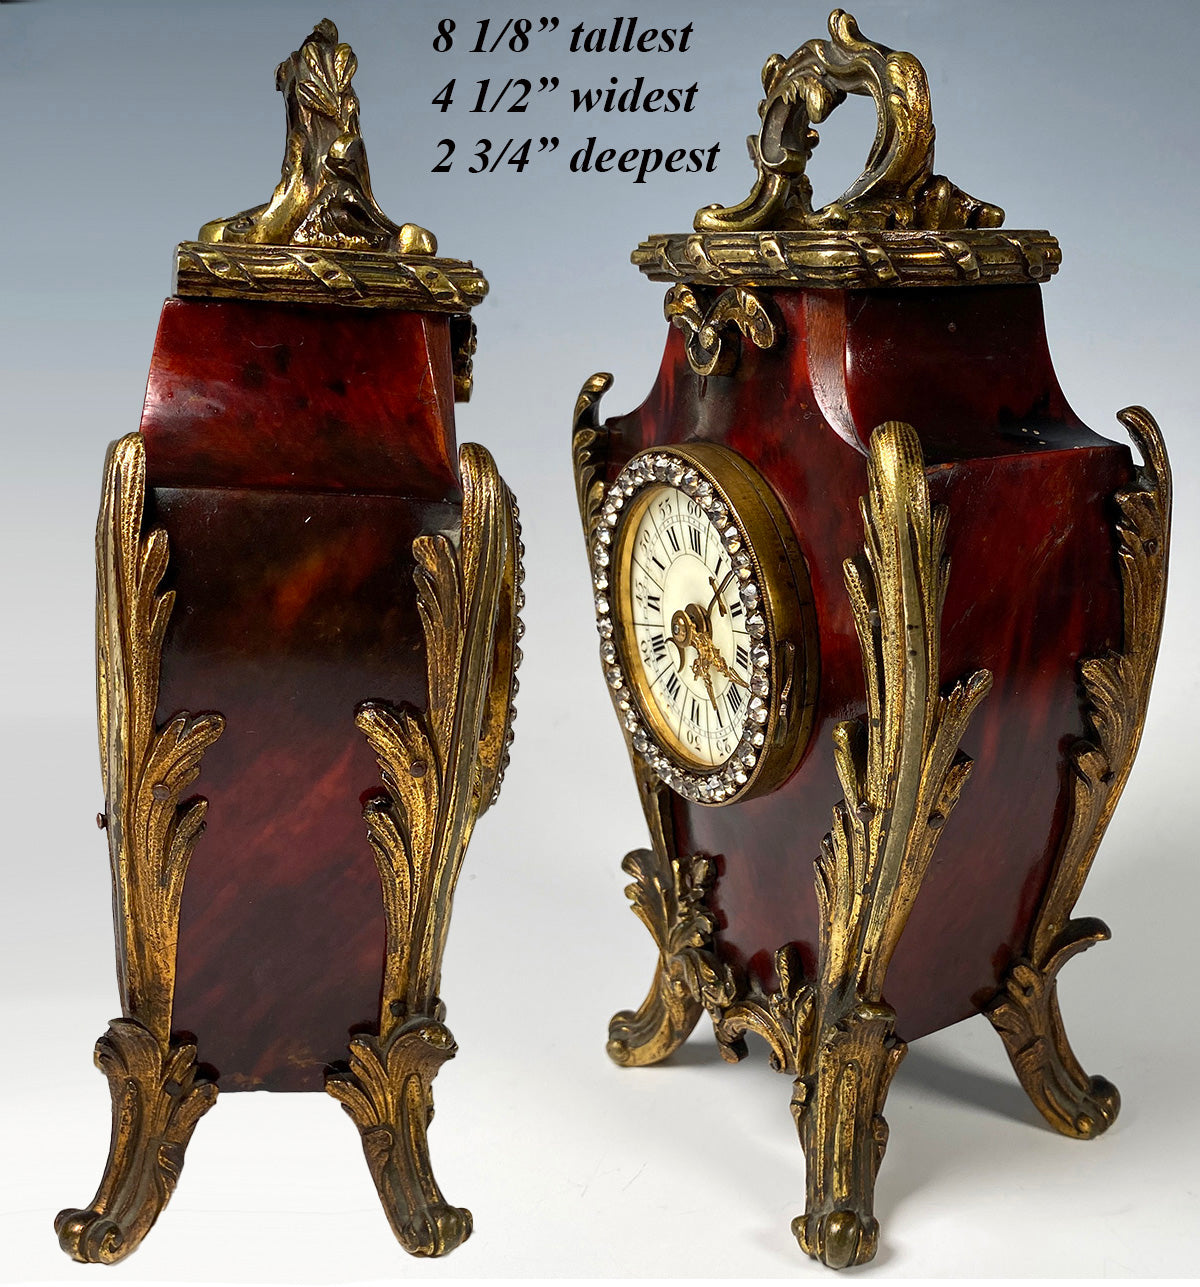 Superb 19th c. Antique French Boudoir or Desk Clock in Tortoise Shell, Paste Gem Face, Enamel Dial